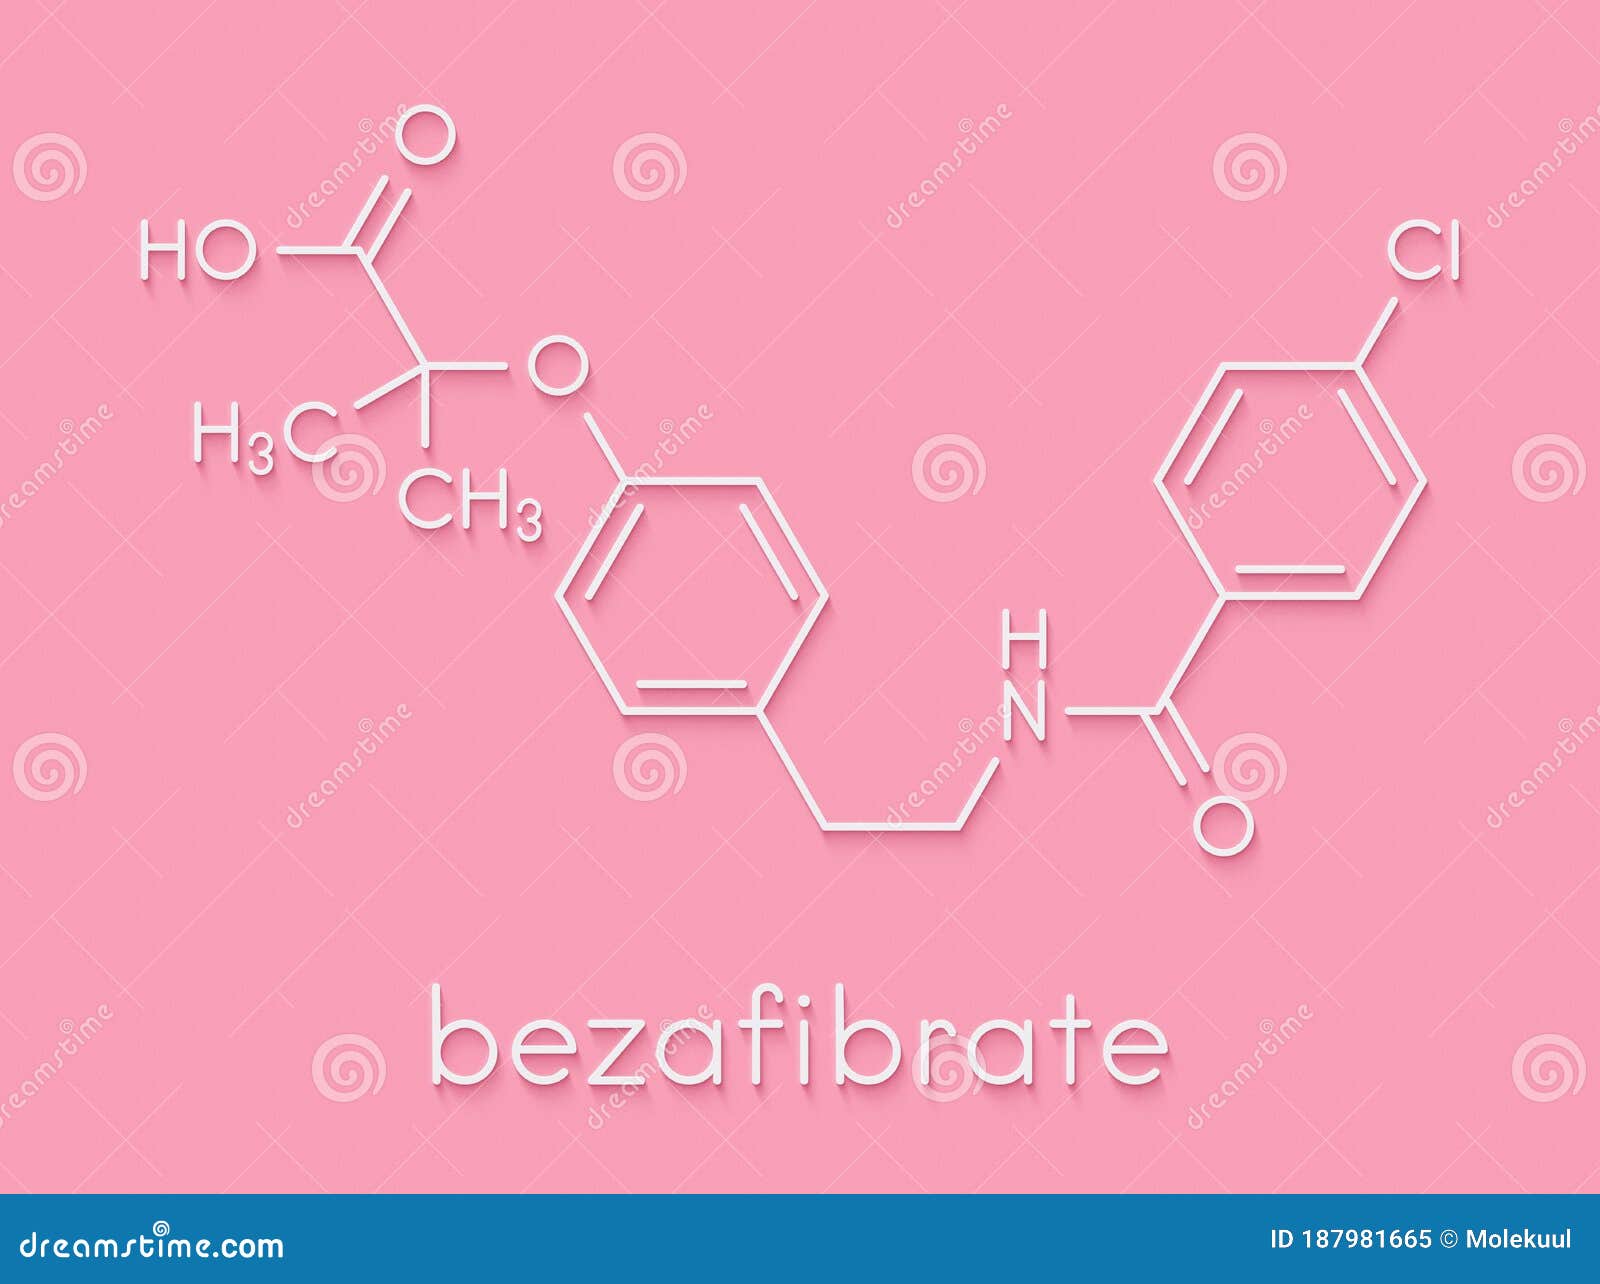 bezafibrate hyperlipidemia drug molecule fibrate class. skeletal formula.